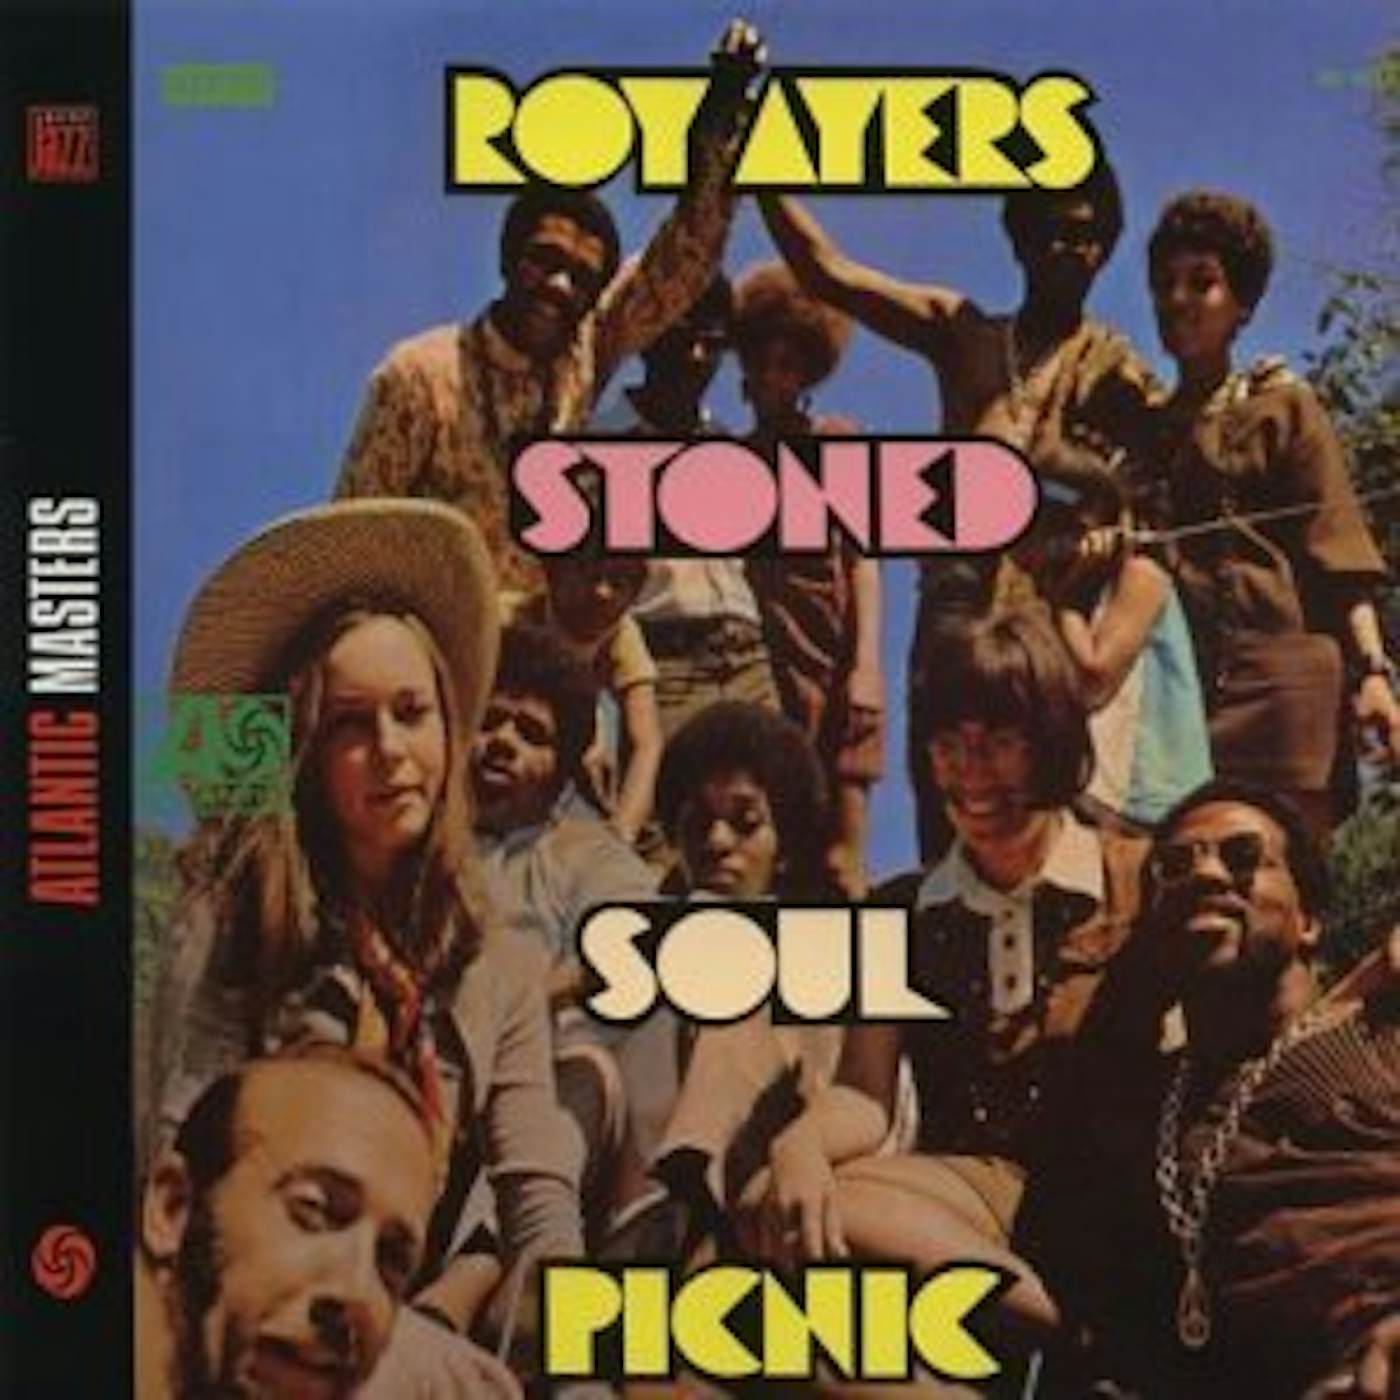 Roy Ayers Stoned Soul Picnic Vinyl Record